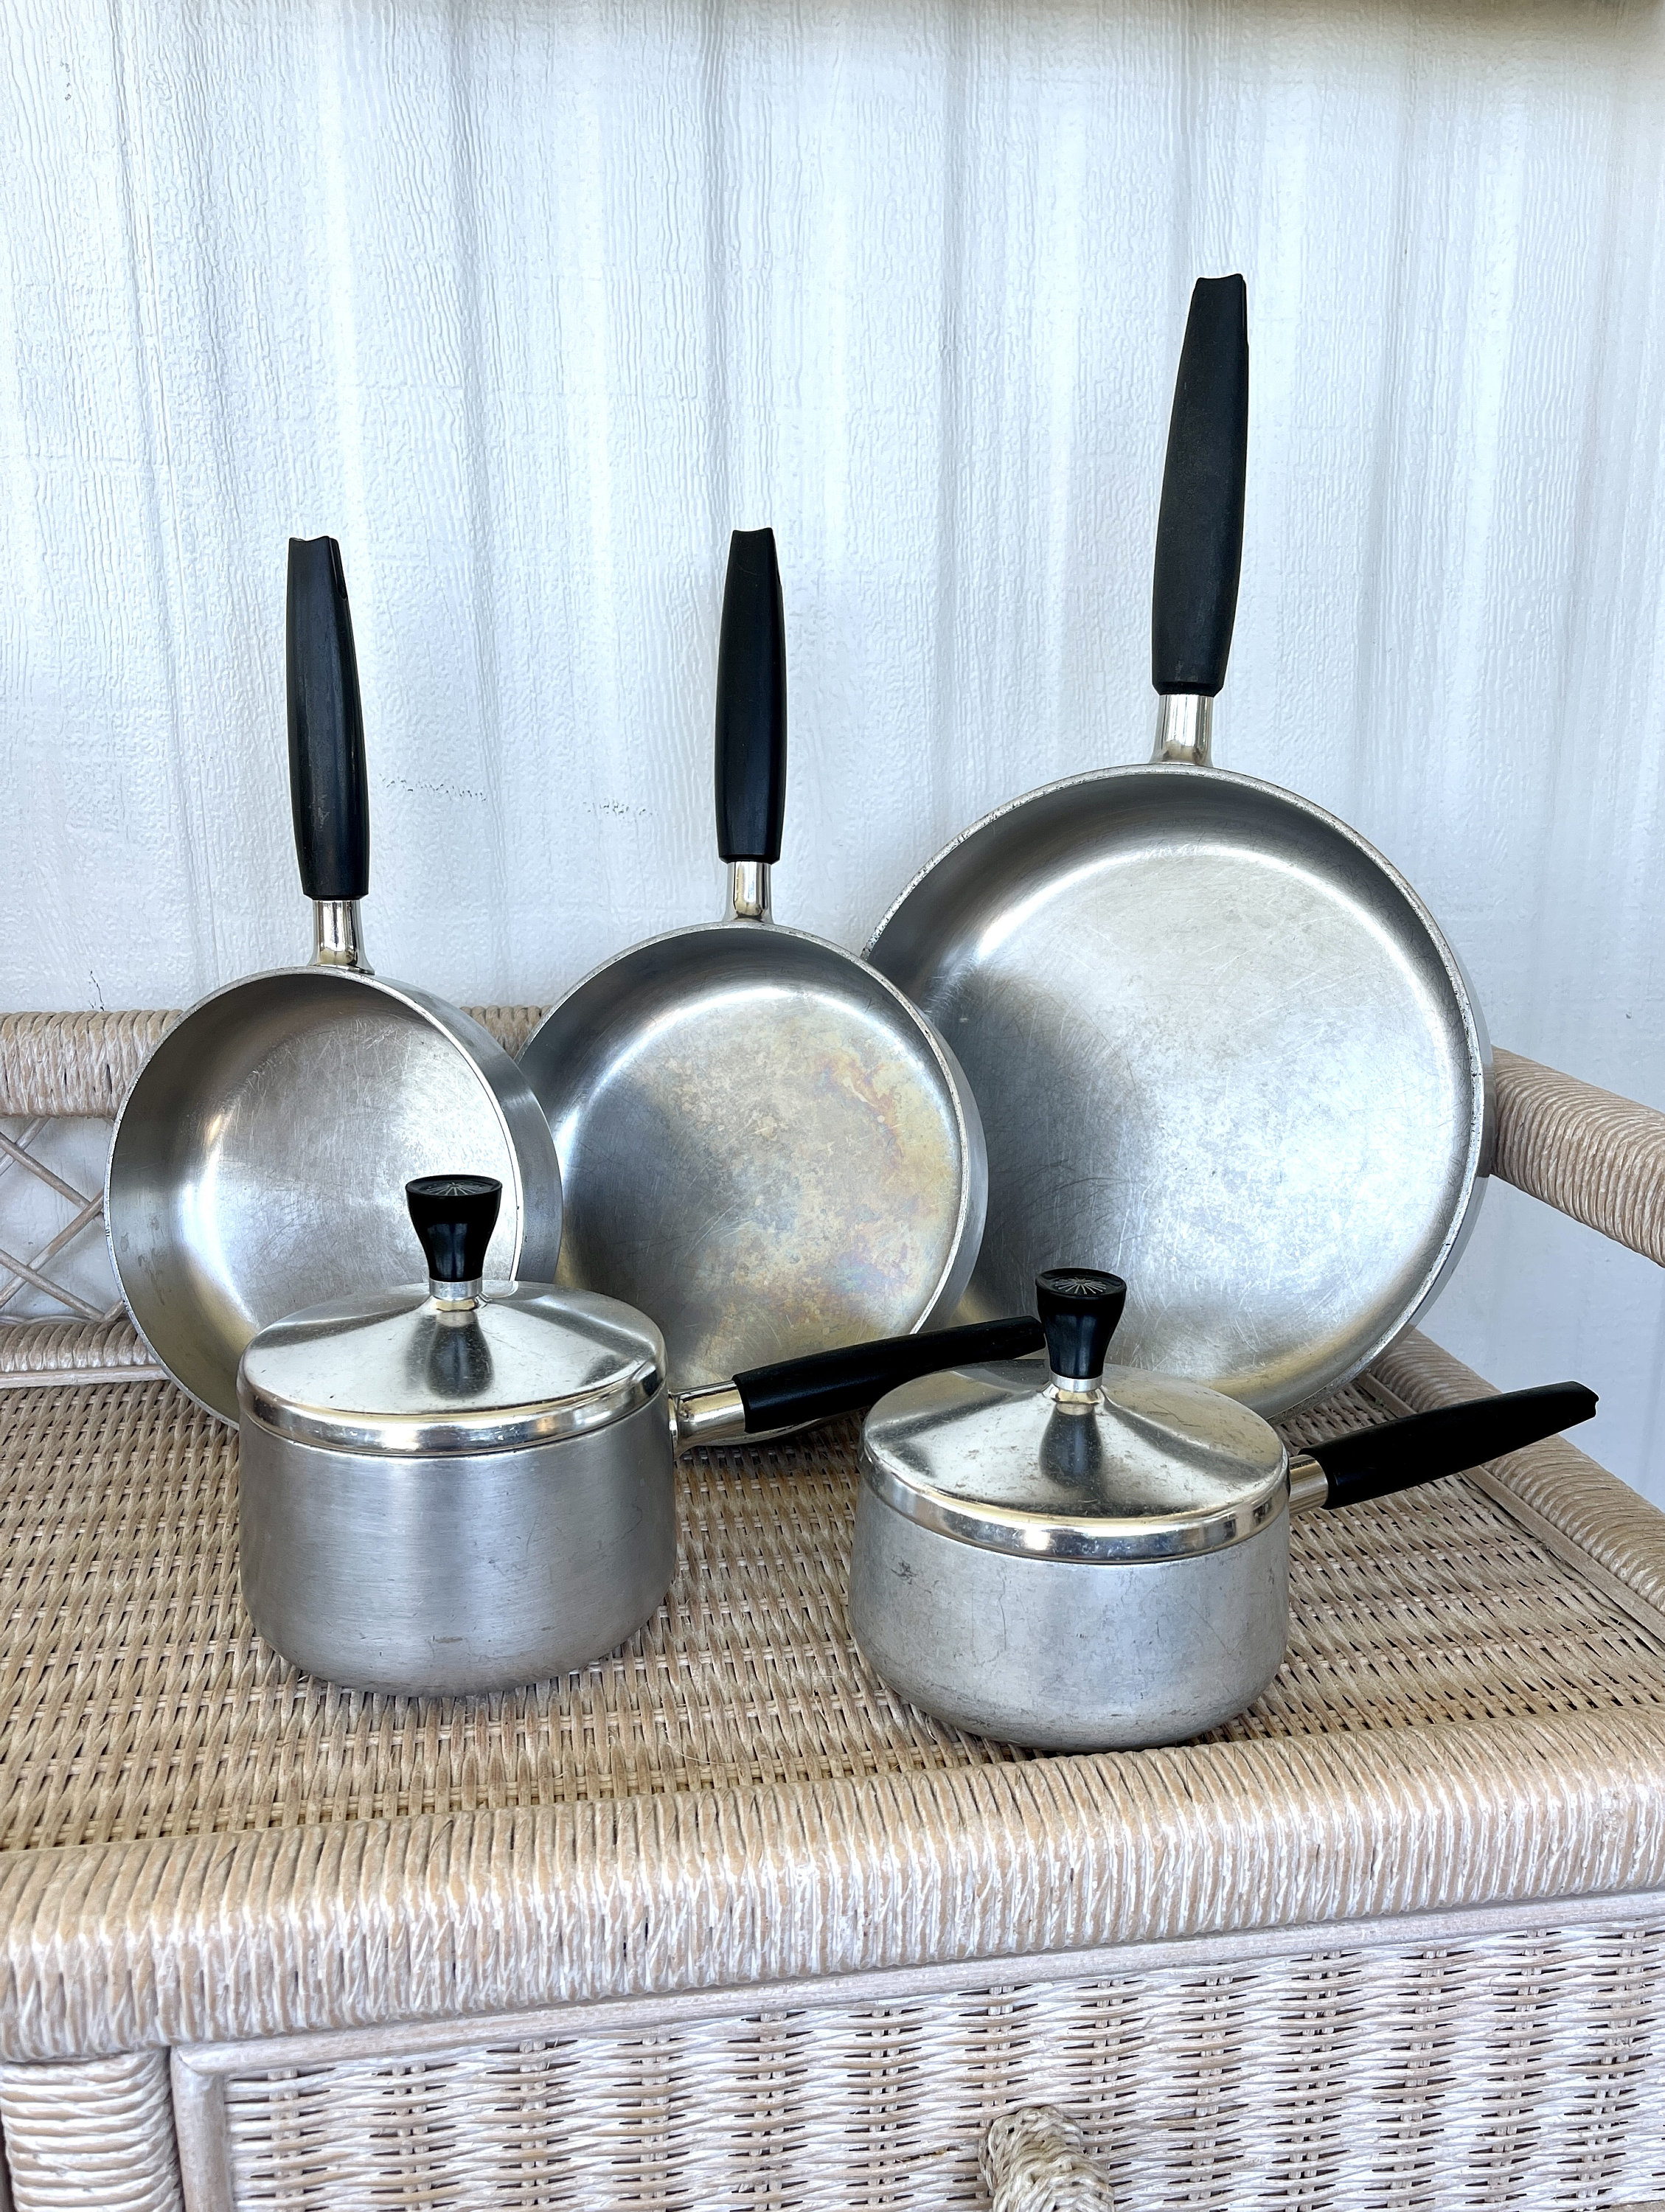 Wearever Cookware Aluminum 1.5 Quart Pot Sauce Pan No. 701 Vintage USA